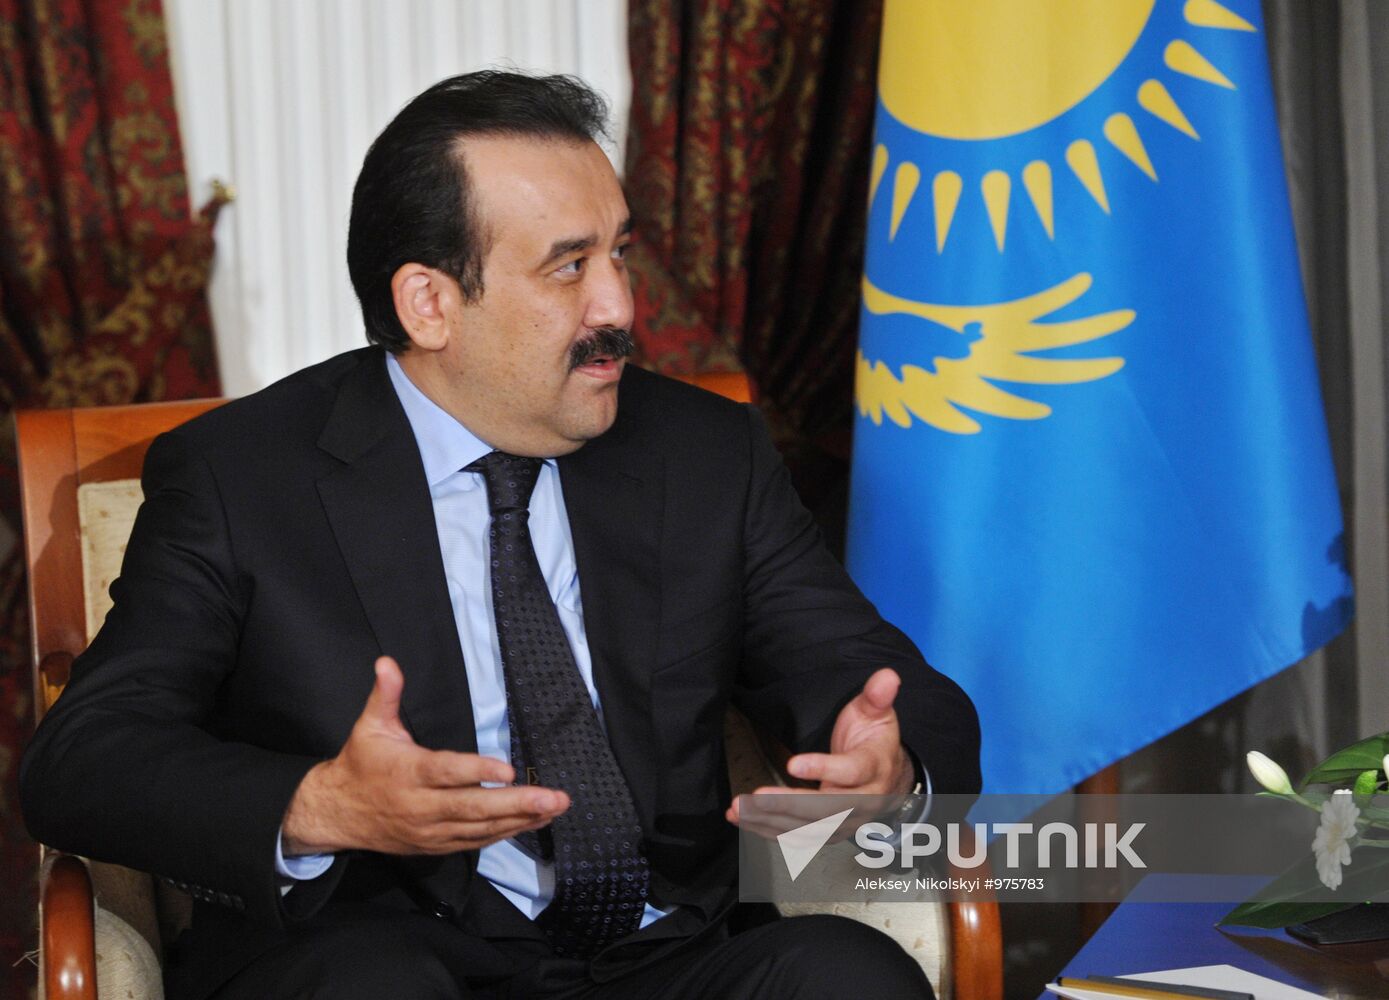 Prime Minister of Kazakhstan Karim Masimov